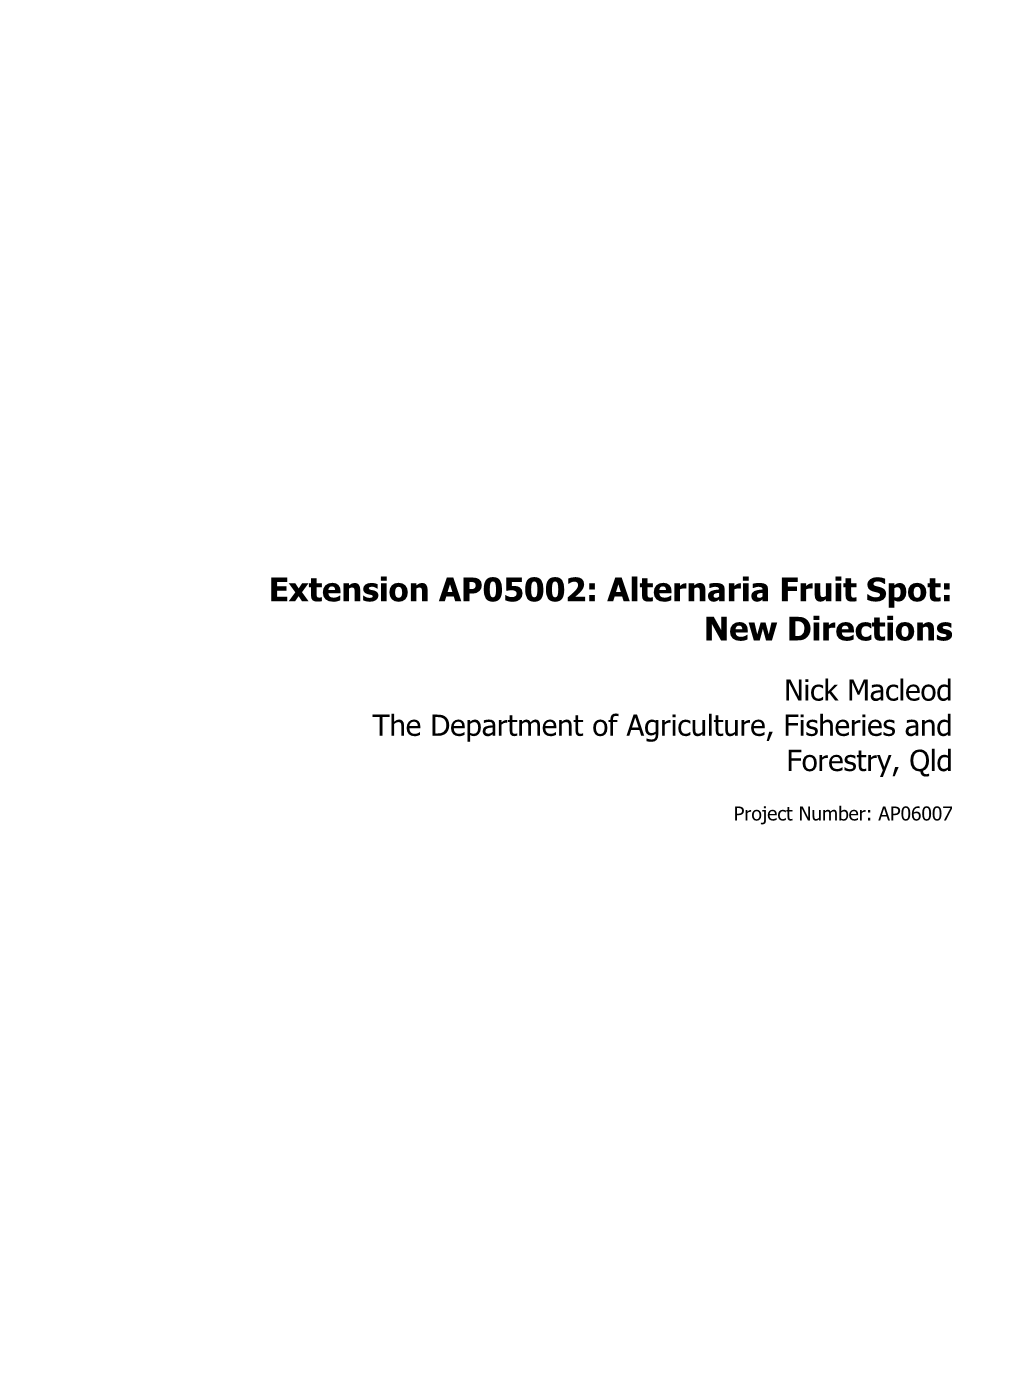 Extension AP05002: Alternaria Fruit Spot: New Directions